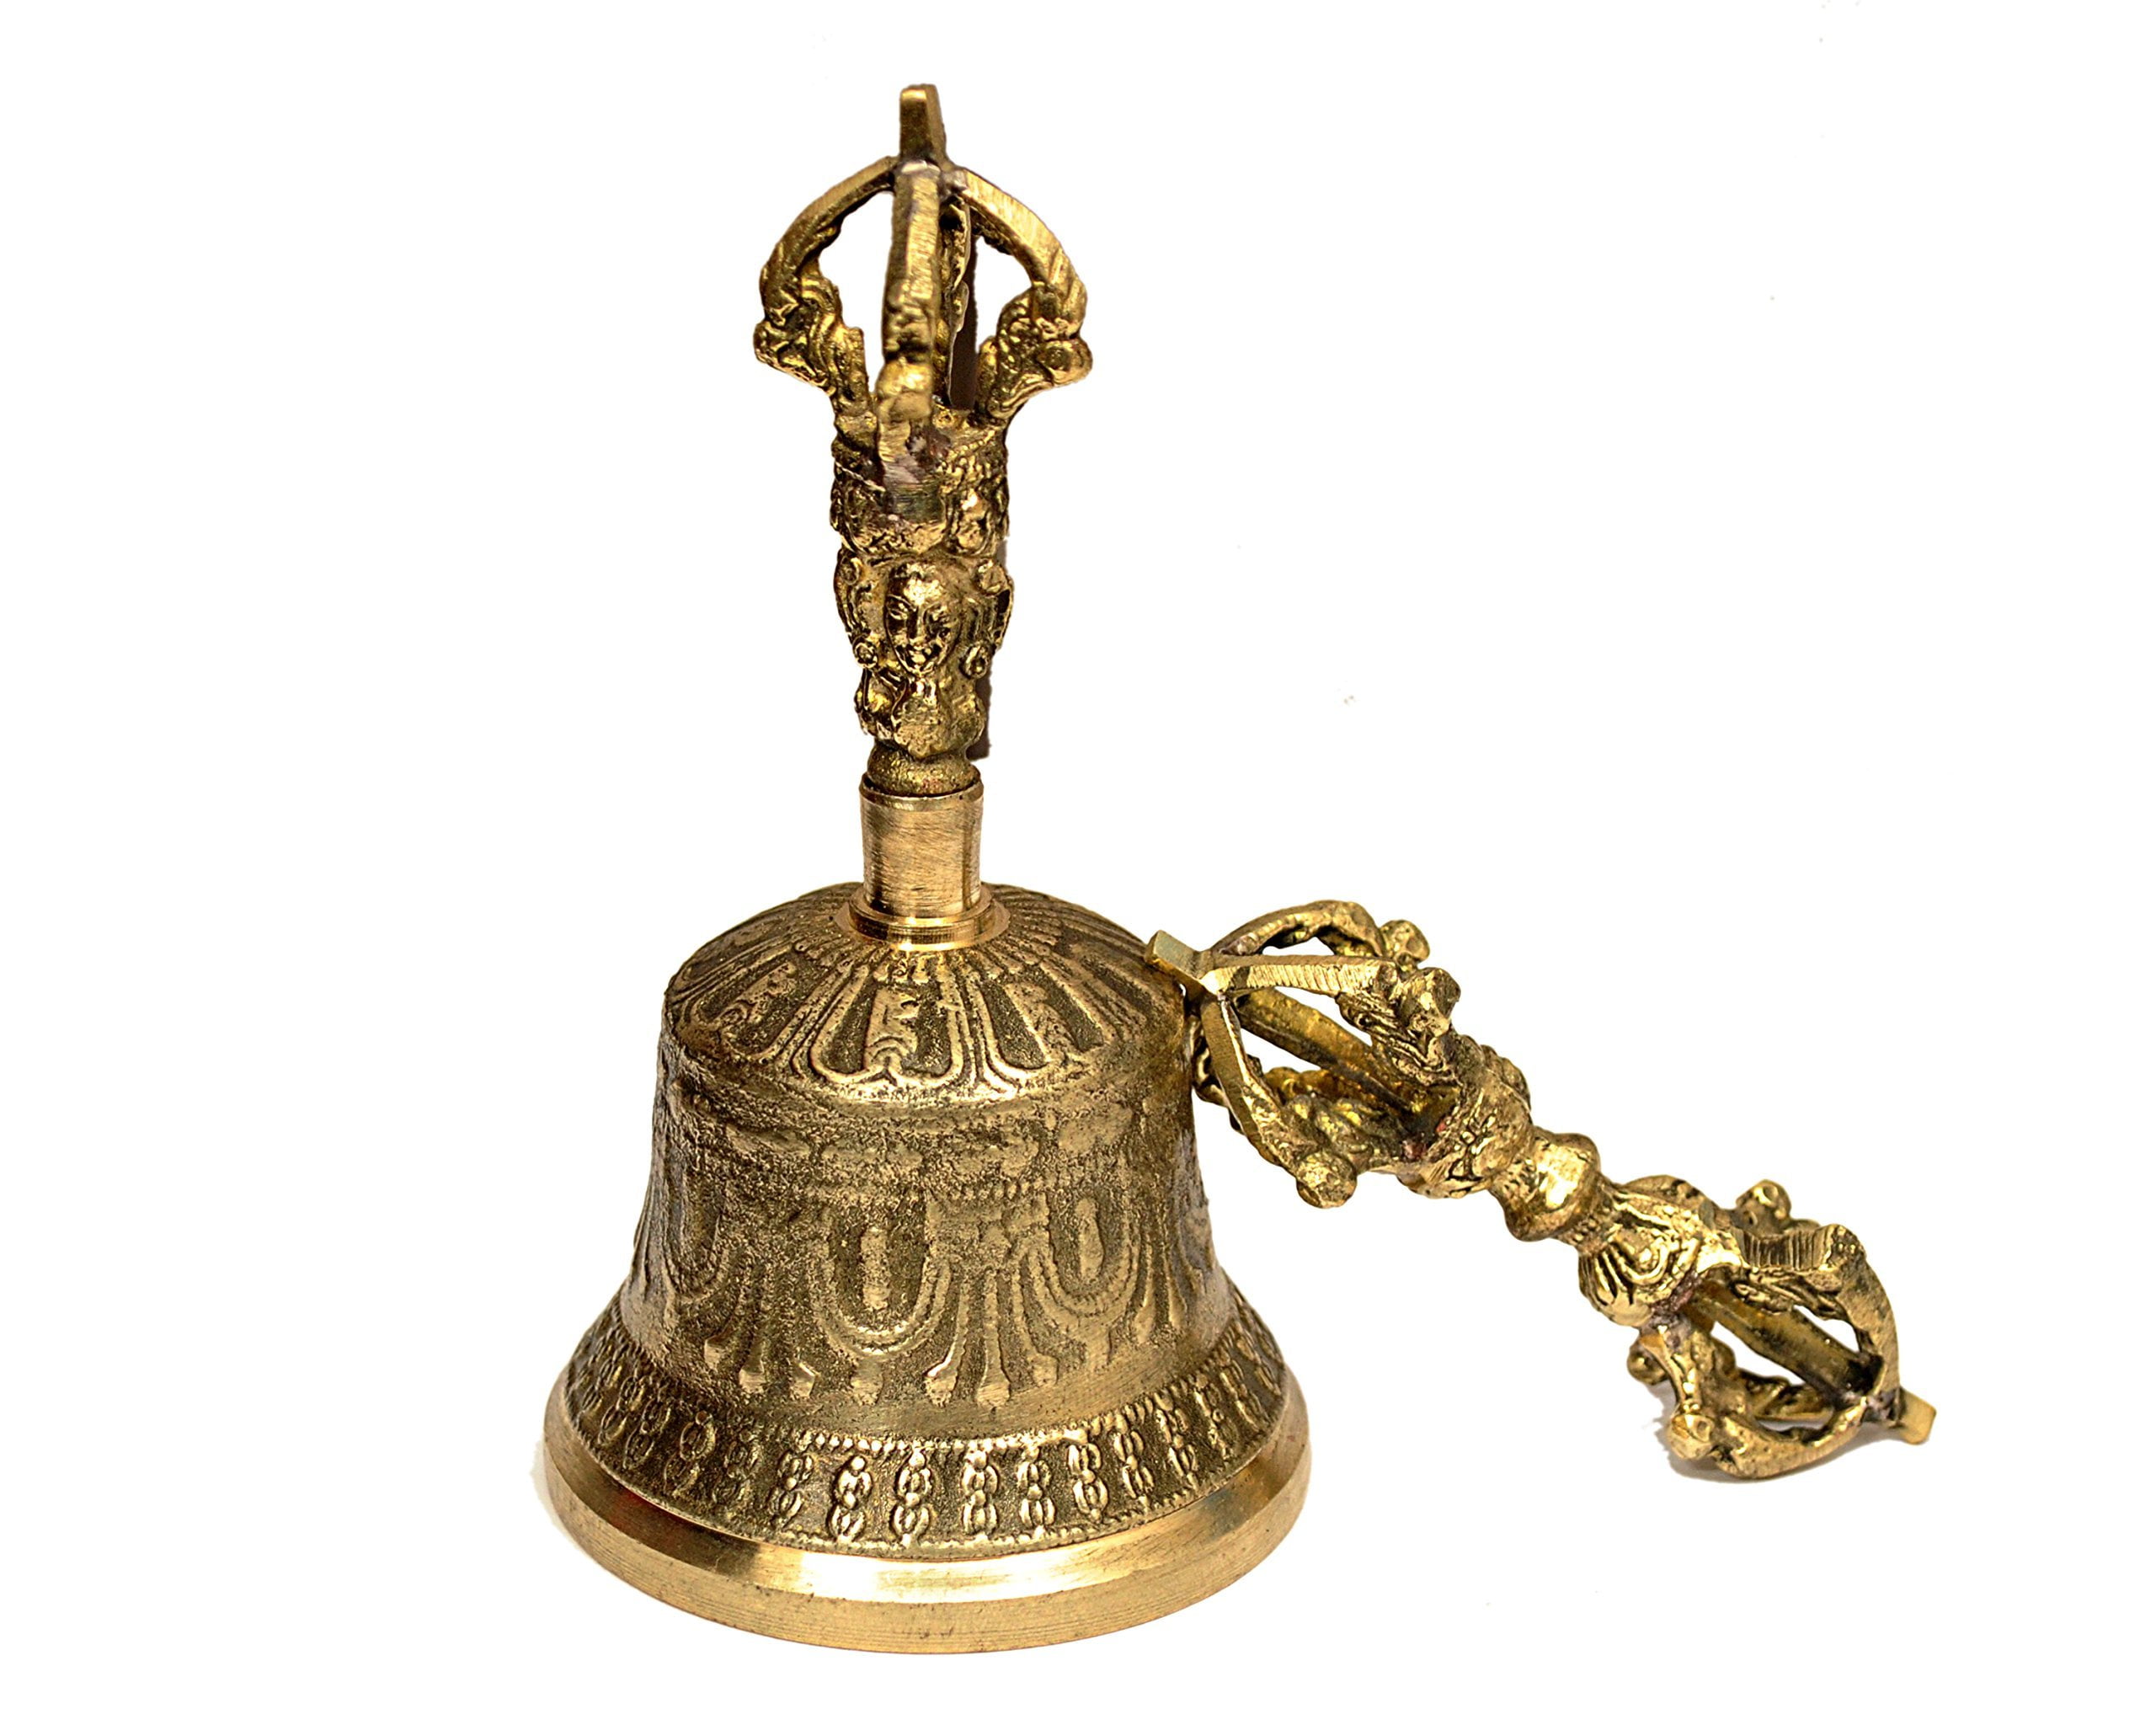 Handcrafted Tibetan Buddhist Temple Meditation Singing Bell with Dorje  Vajra Buddhism Practice Instrument